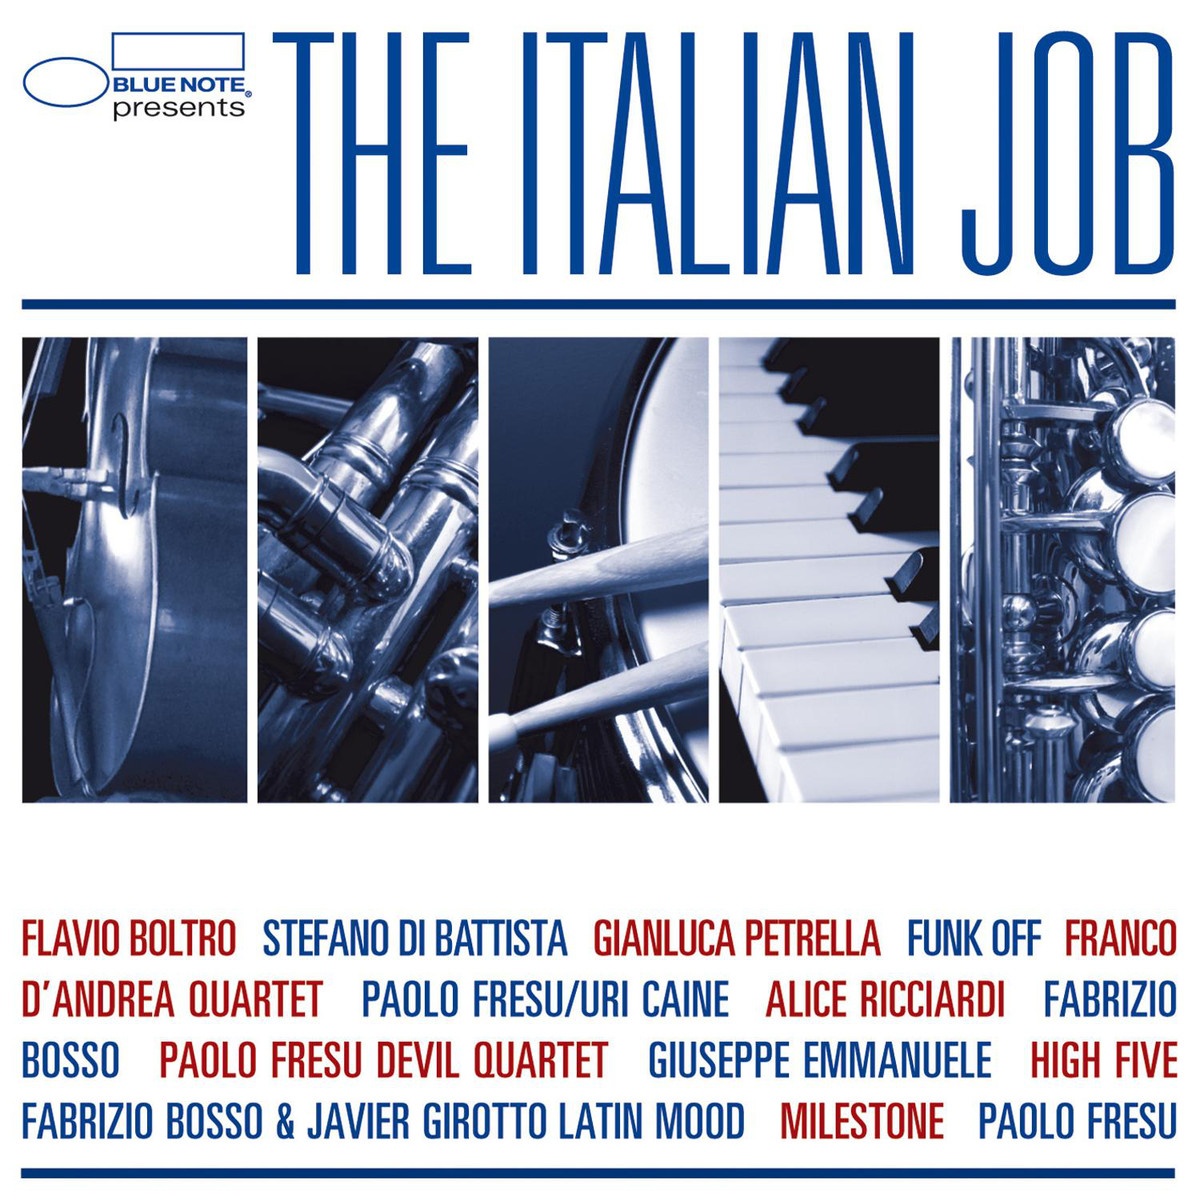 Blue Note presents: The Italian Job